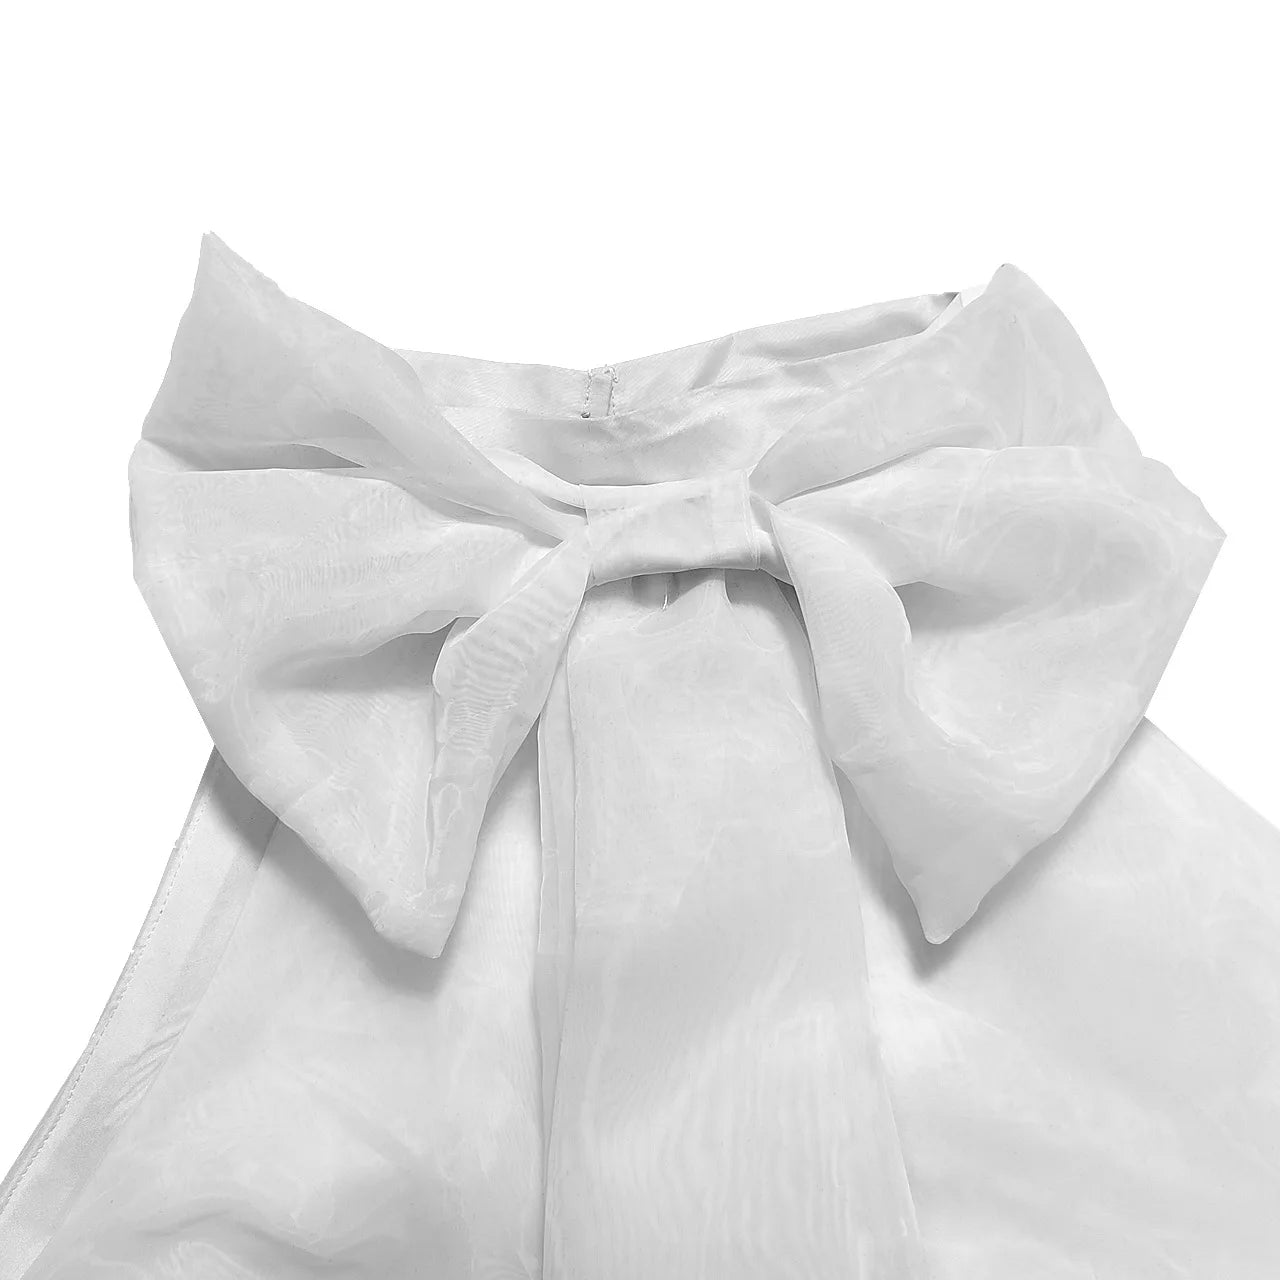 FZ Women's Cute Bow Neck Layered Puffy A Line Sleeveless Dress